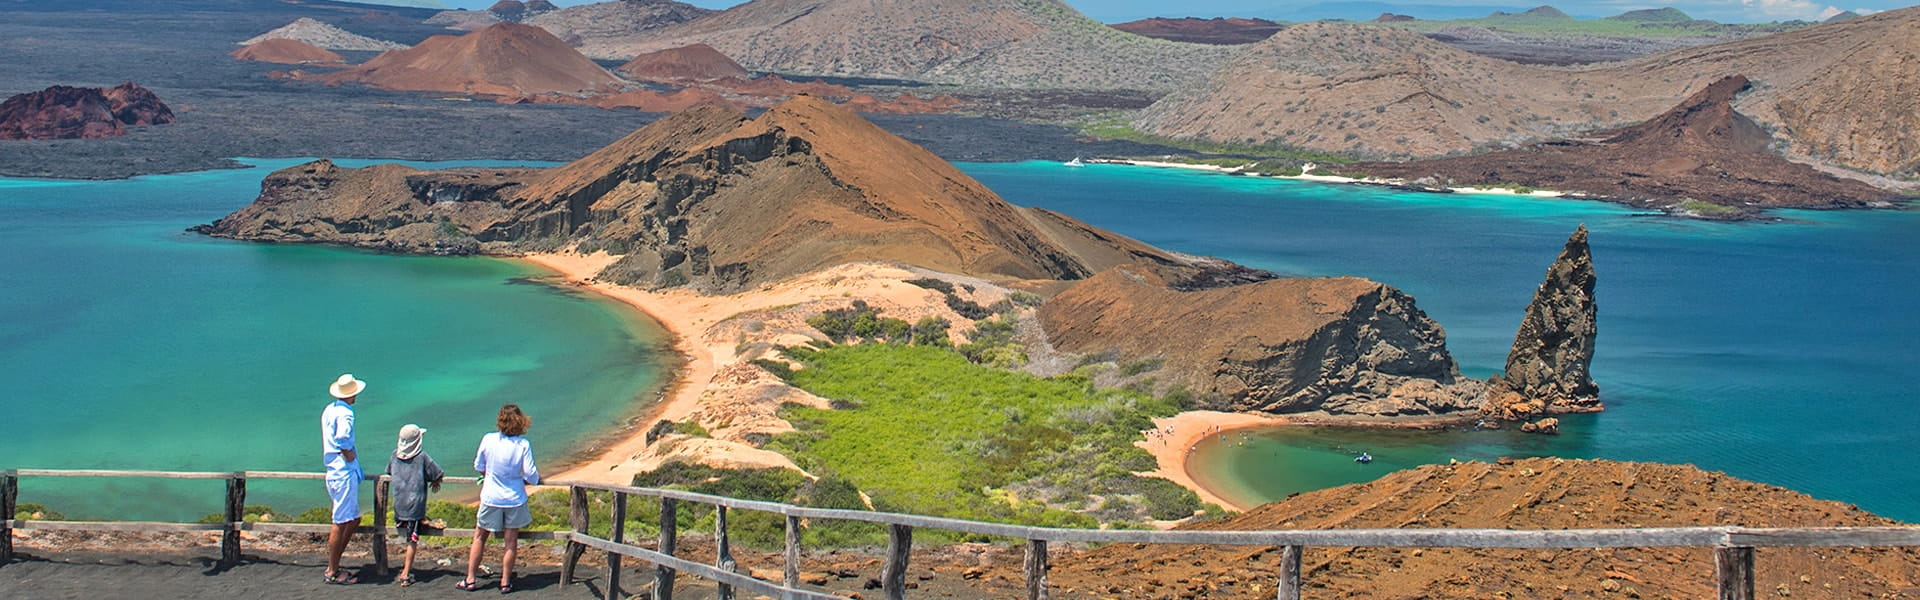 Galapagos Islands Travel Guide & Tips | Quasar Expeditions